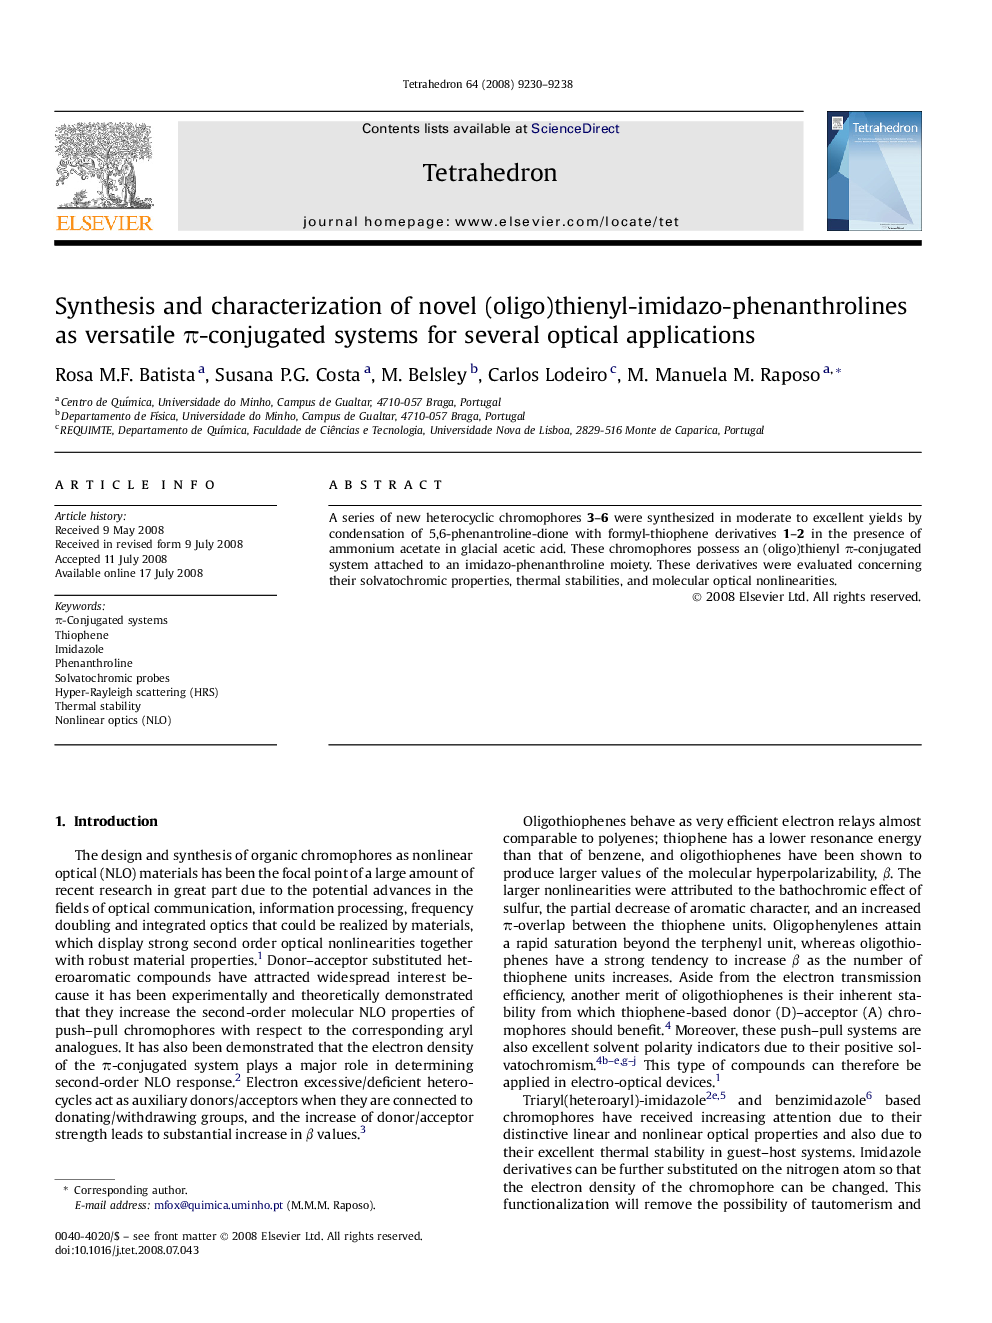 Synthesis and characterization of novel (oligo)thienyl-imidazo-phenanthrolines as versatile Ï-conjugated systems for several optical applications